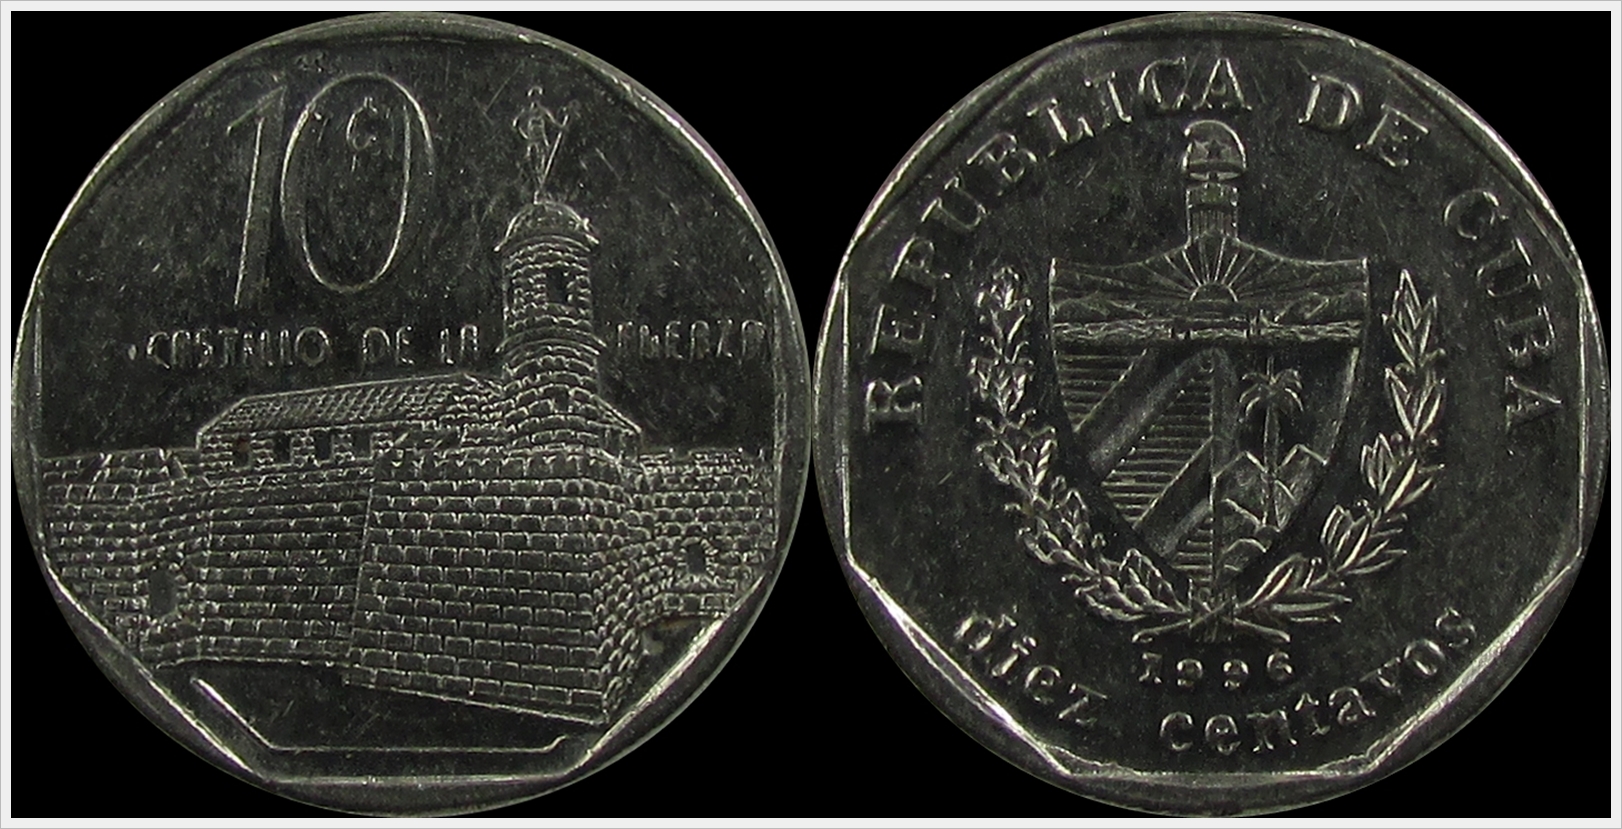 Cuba Convertible 1996 10 Centavos.jpg